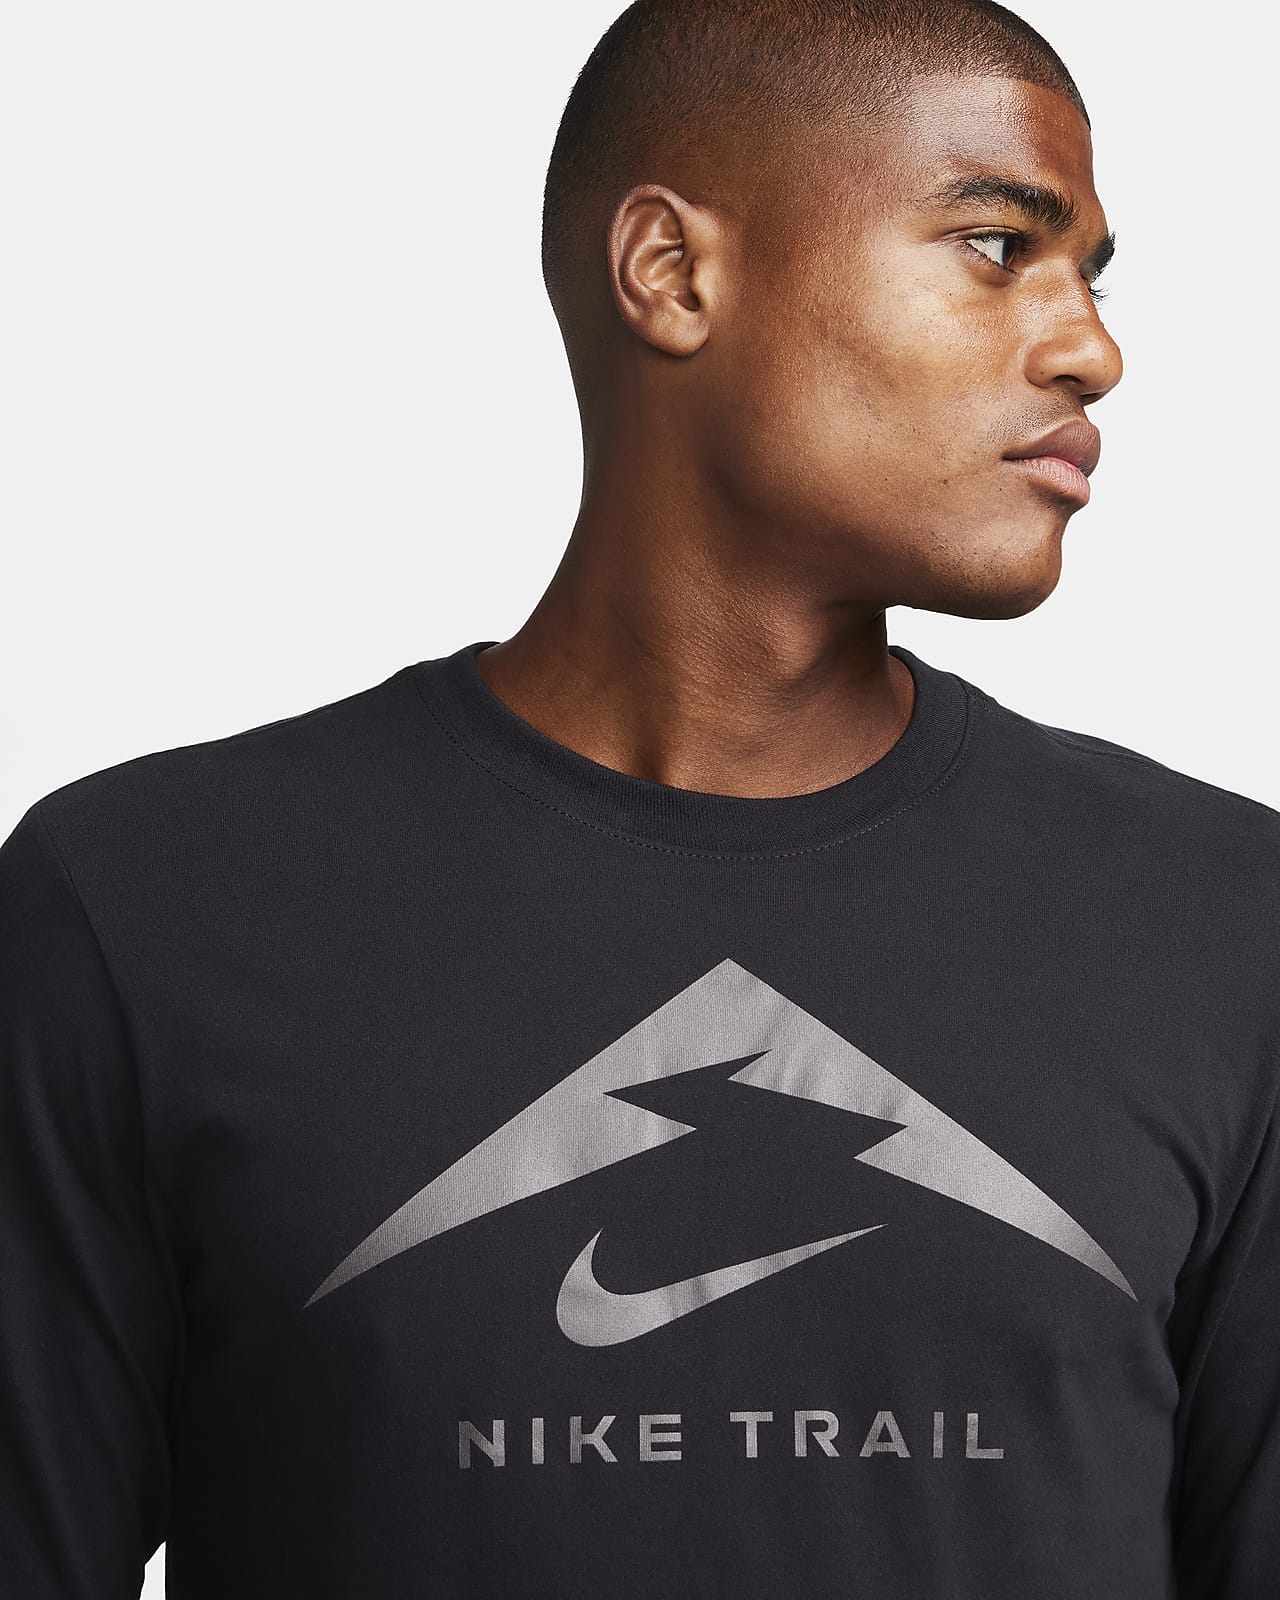 Nike Debardeur de Trail Running Homme - Dri-FIT - coconut milk